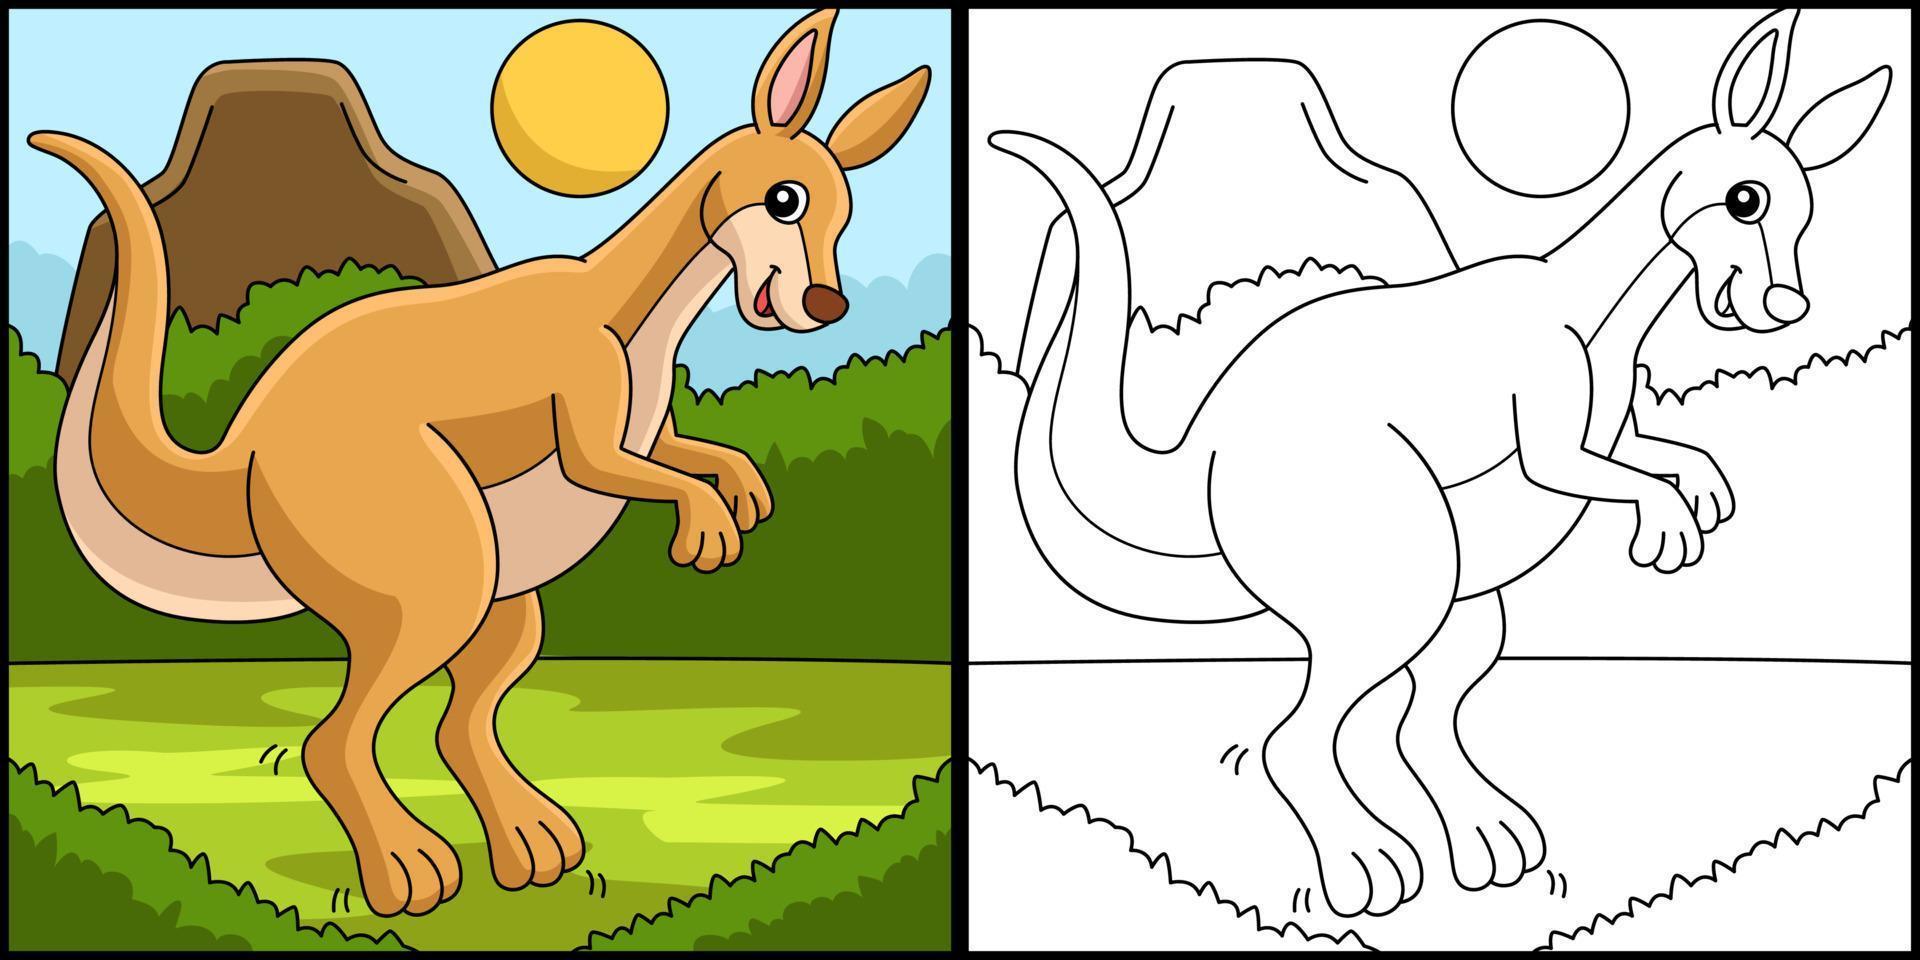 Kangaroo Animal Coloring Page Colored Illustration vector